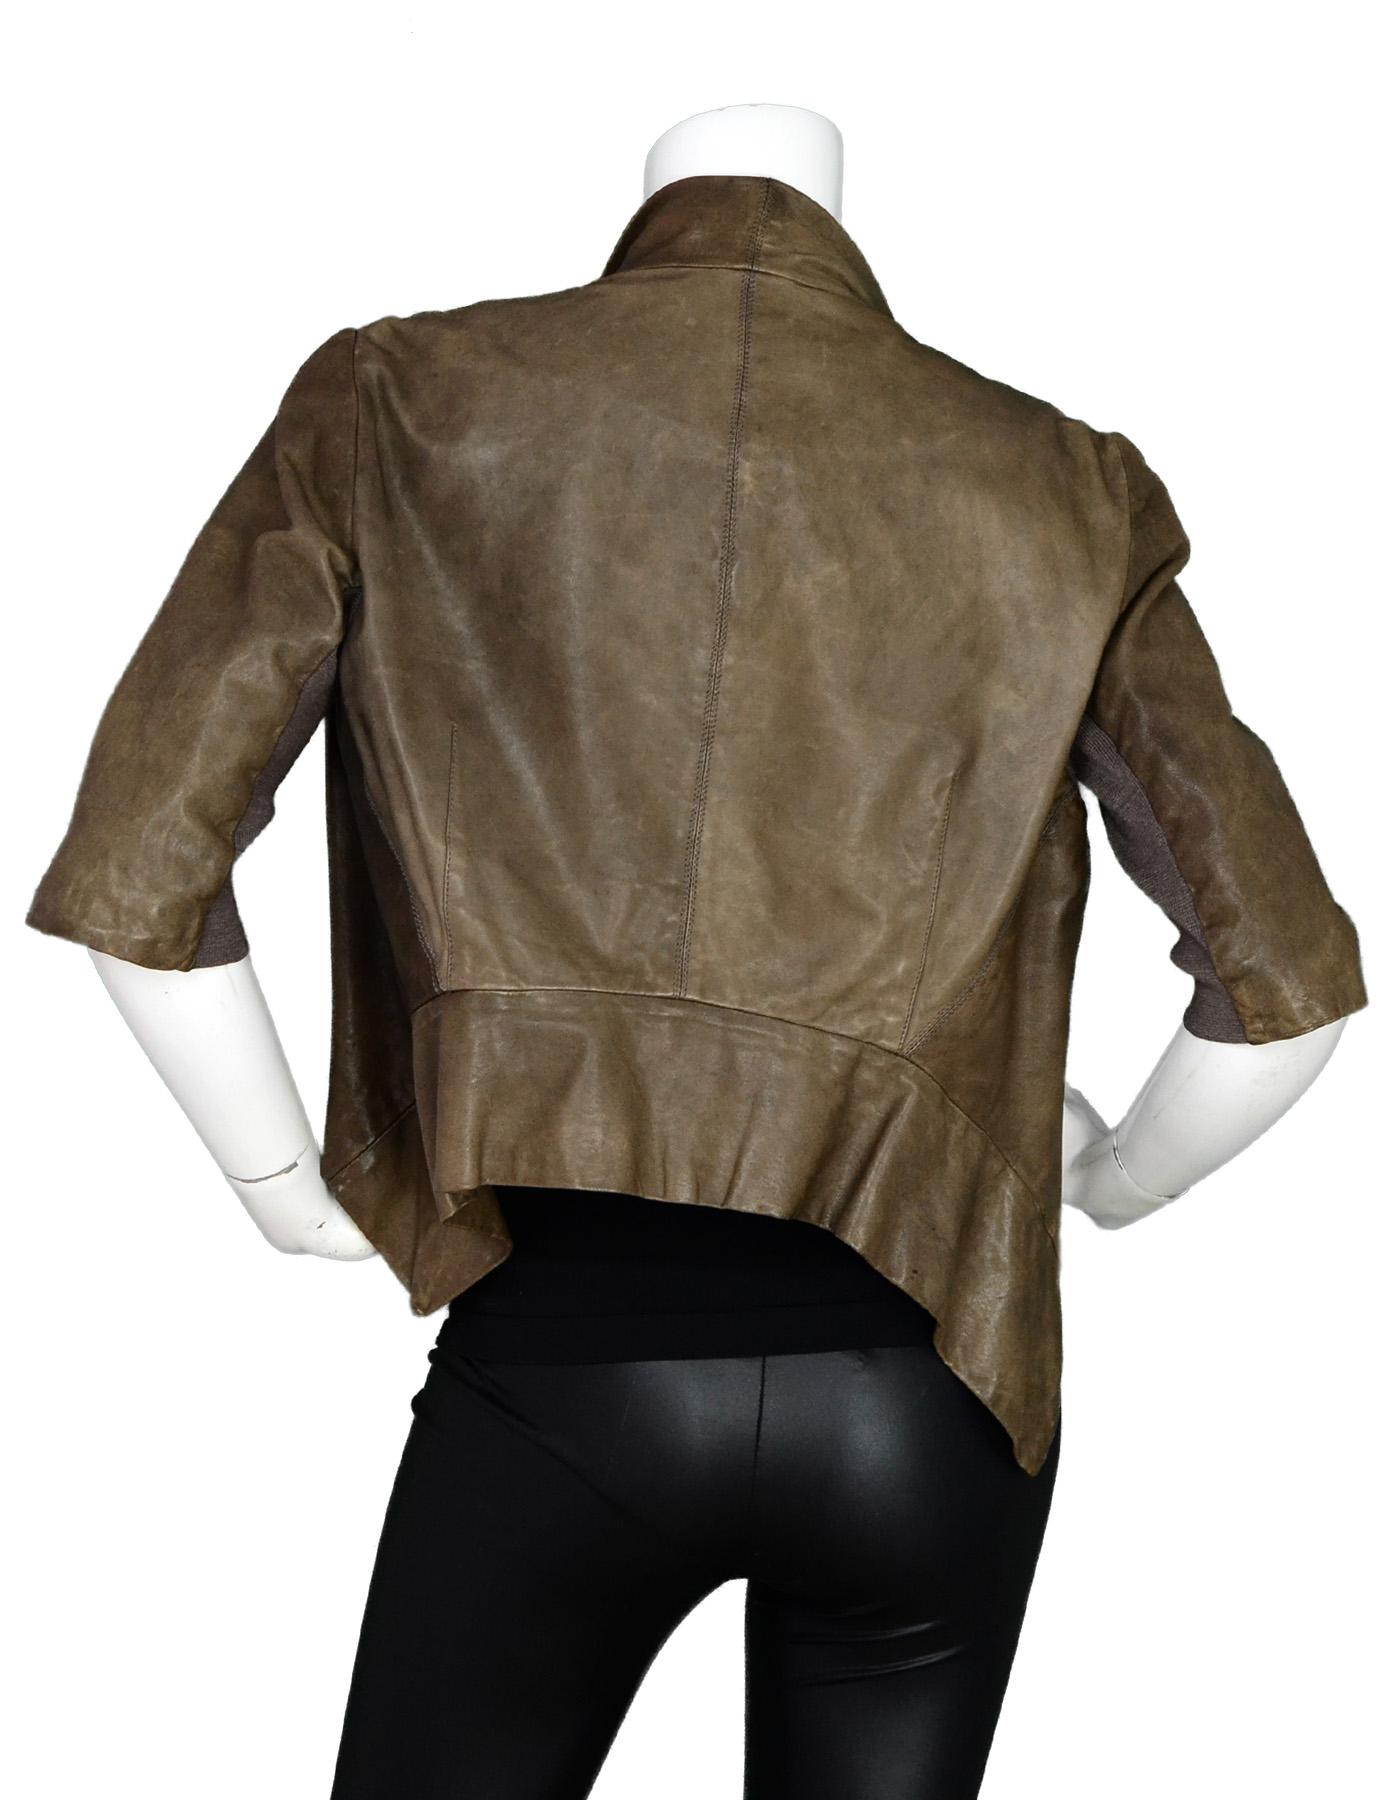 3/4 sleeve leather jacket